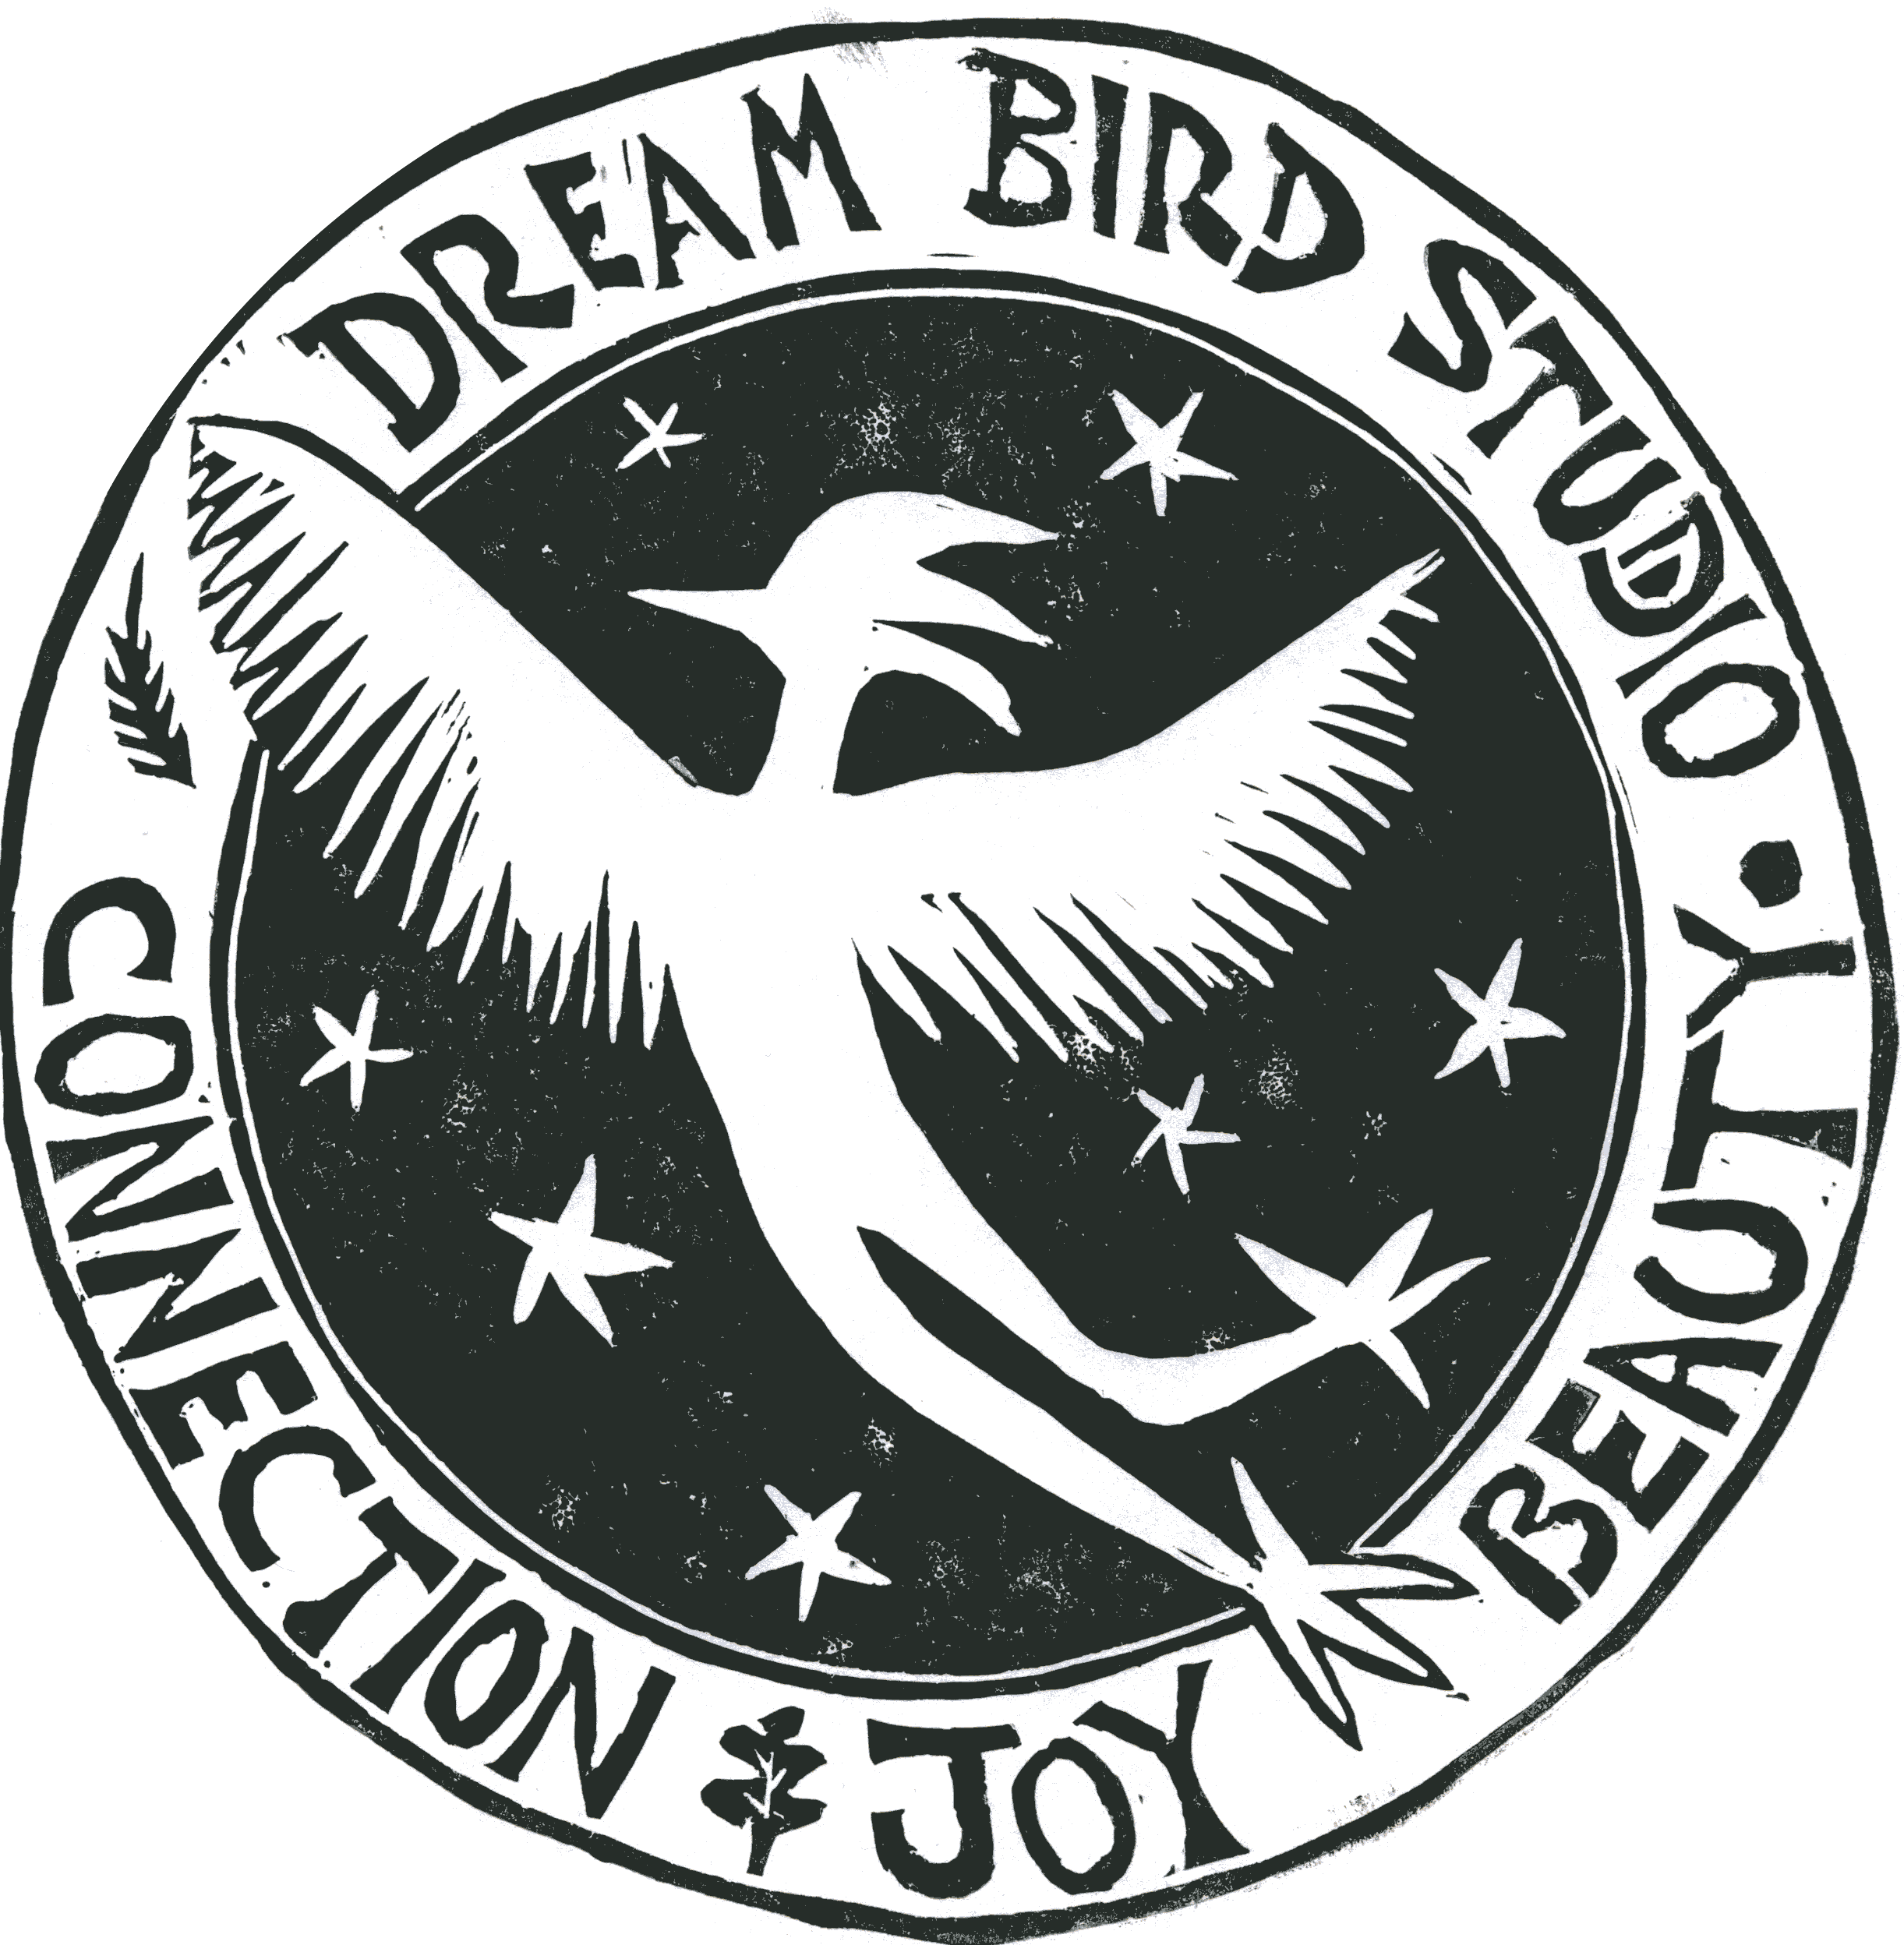 DreamBird